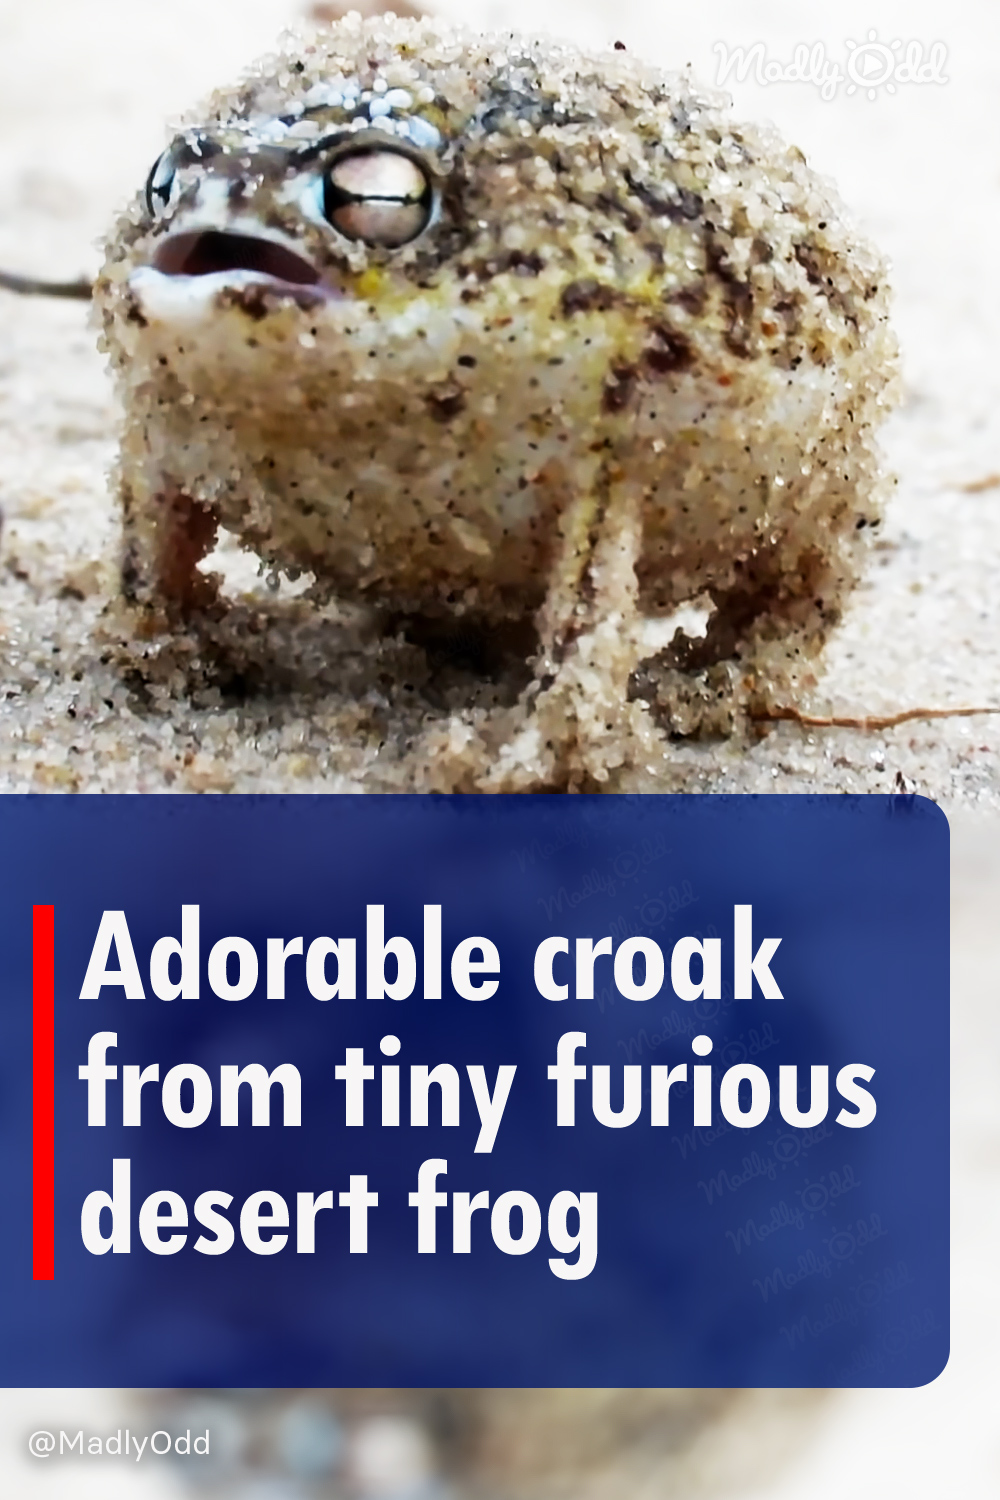 Adorable croak from tiny furious desert frog